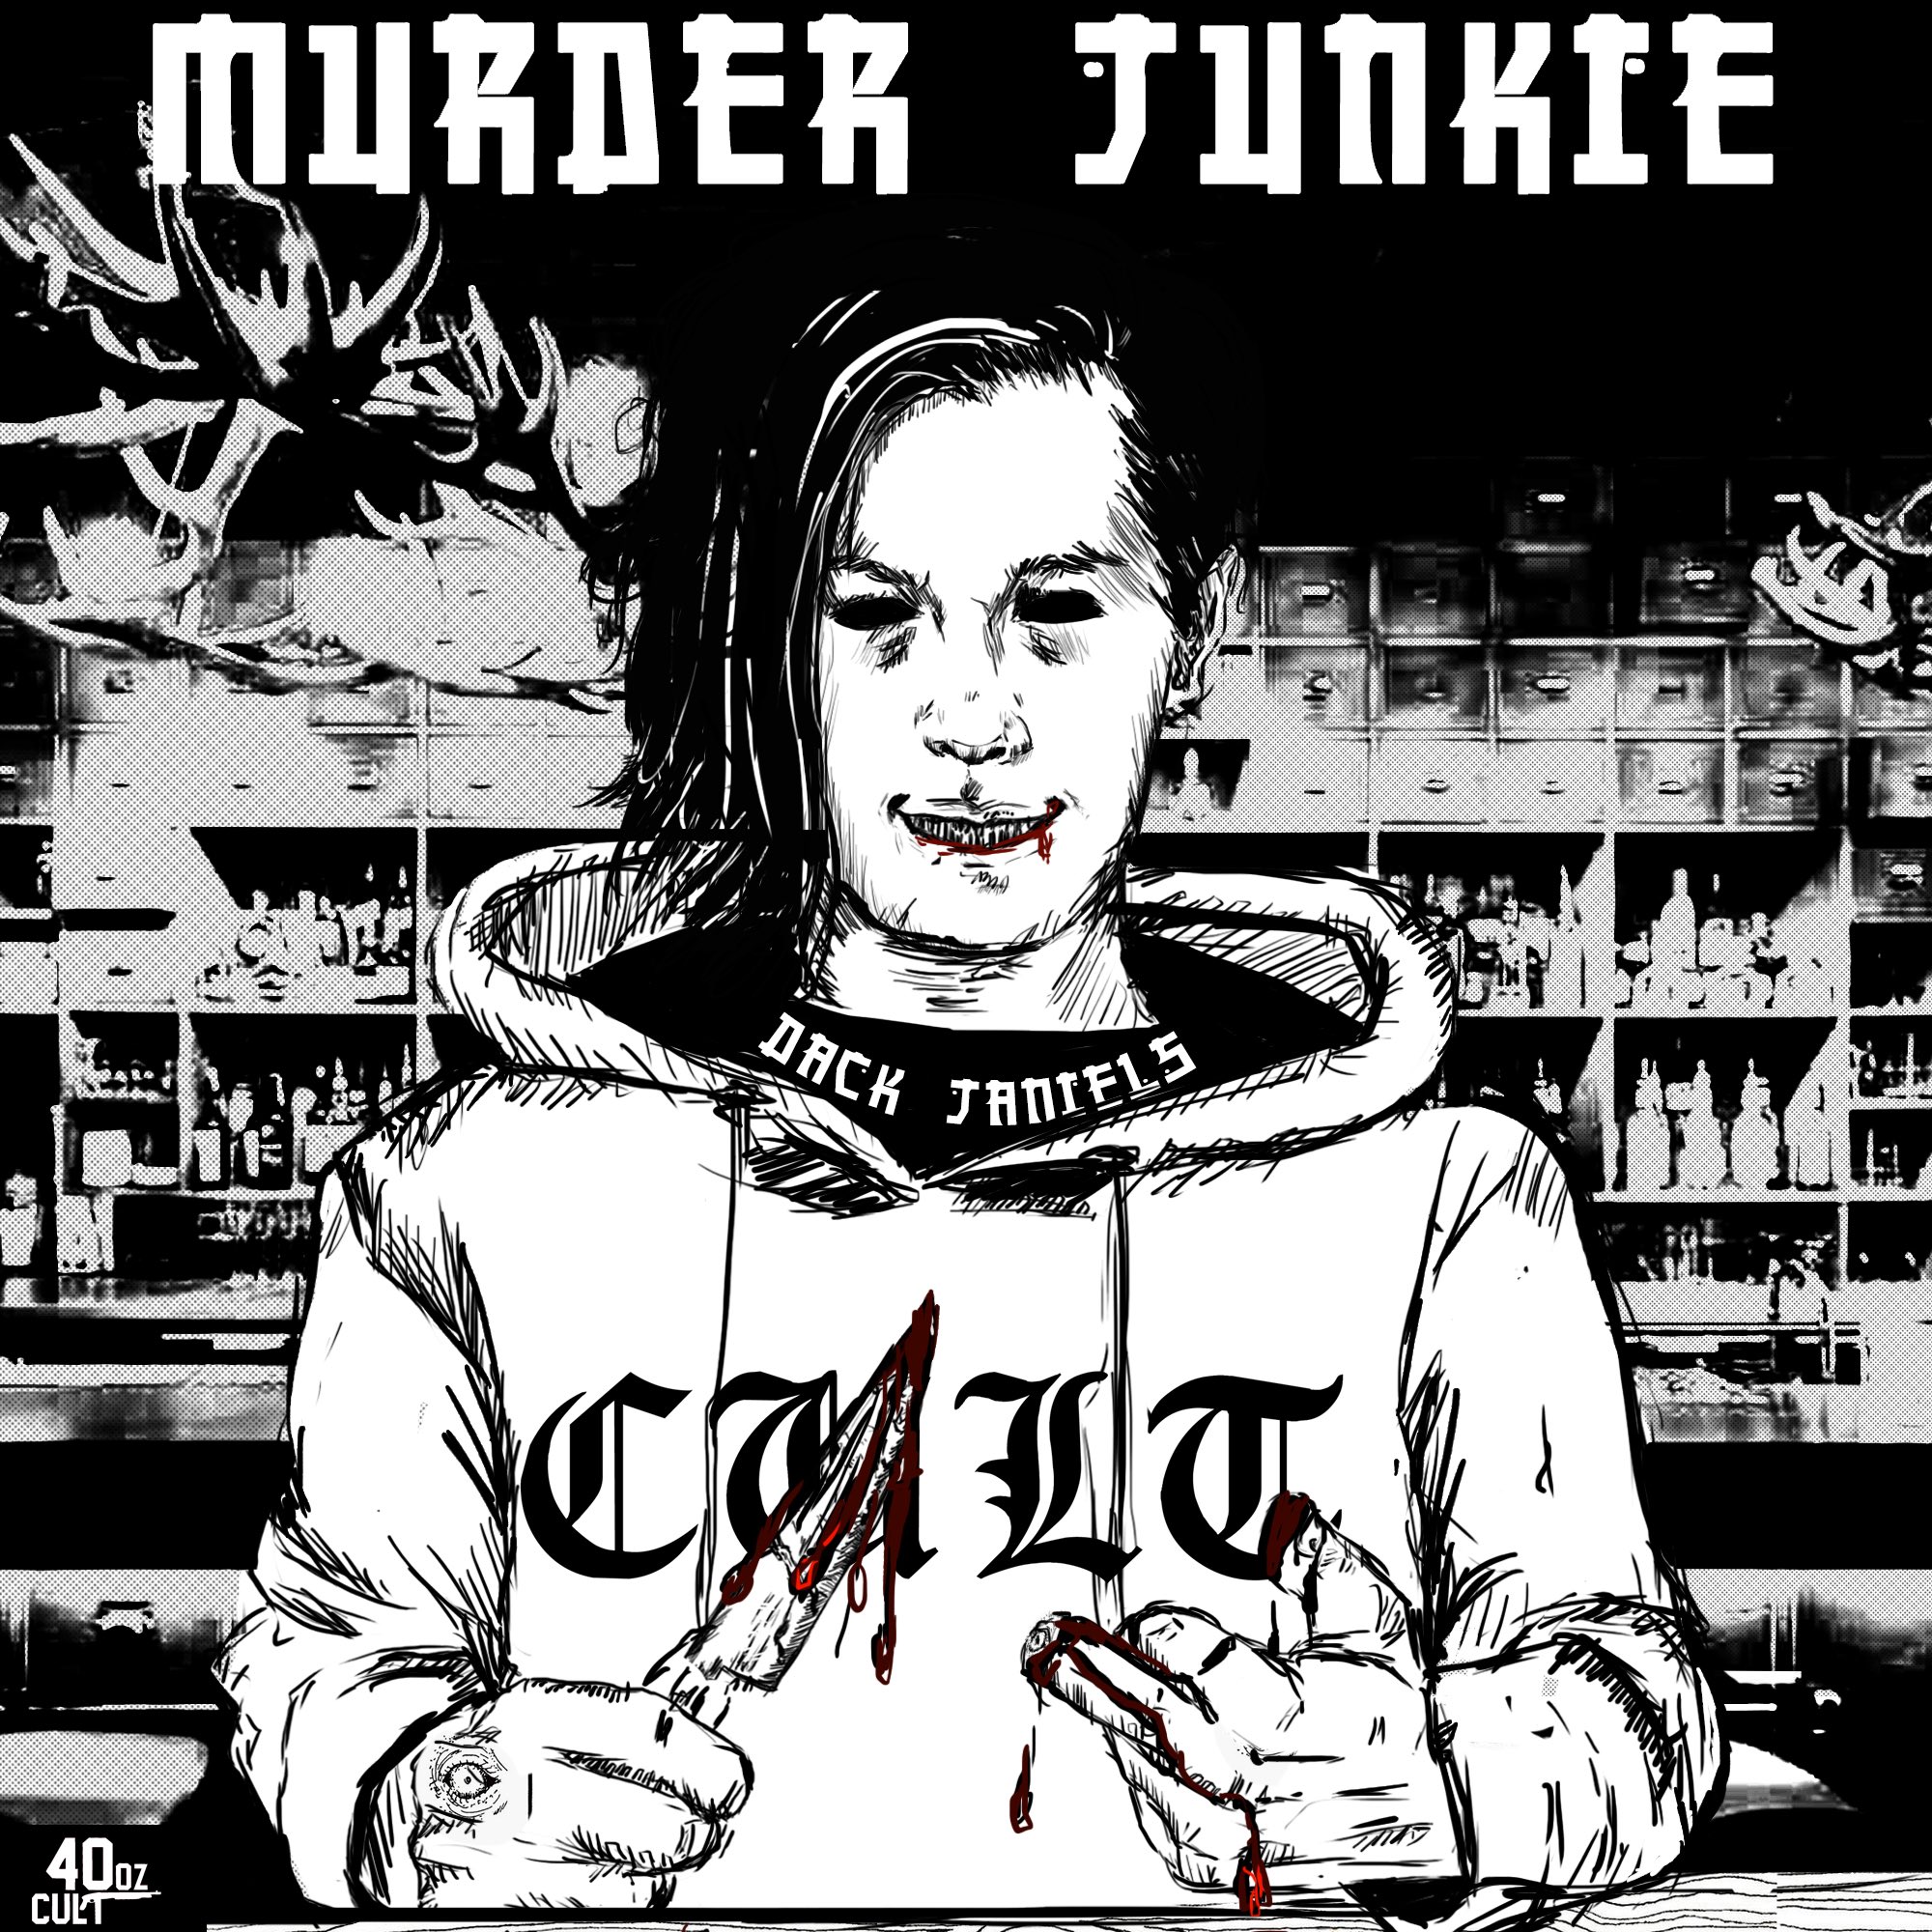 Dack Janiels Murder Junkie